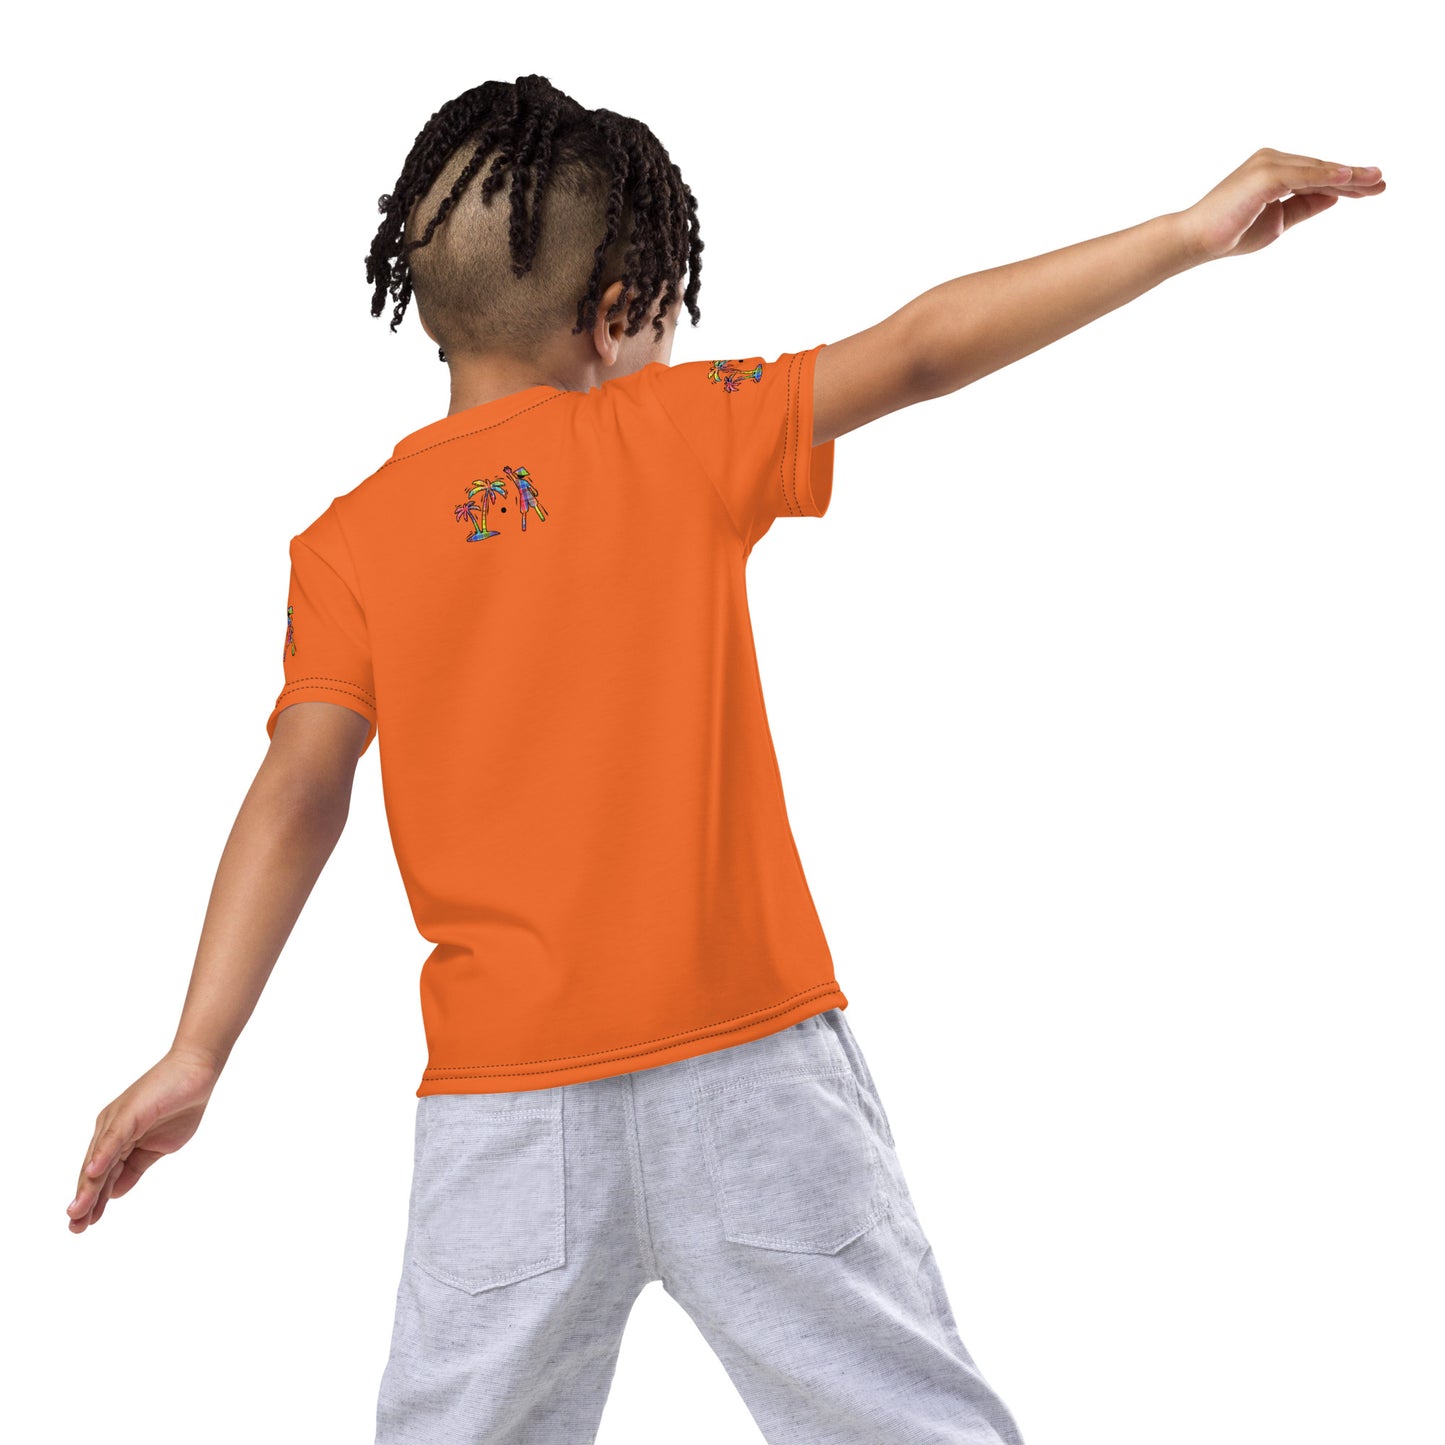 Orange V.Localized (Madras) Dry-Fit Kids  T-Shirt